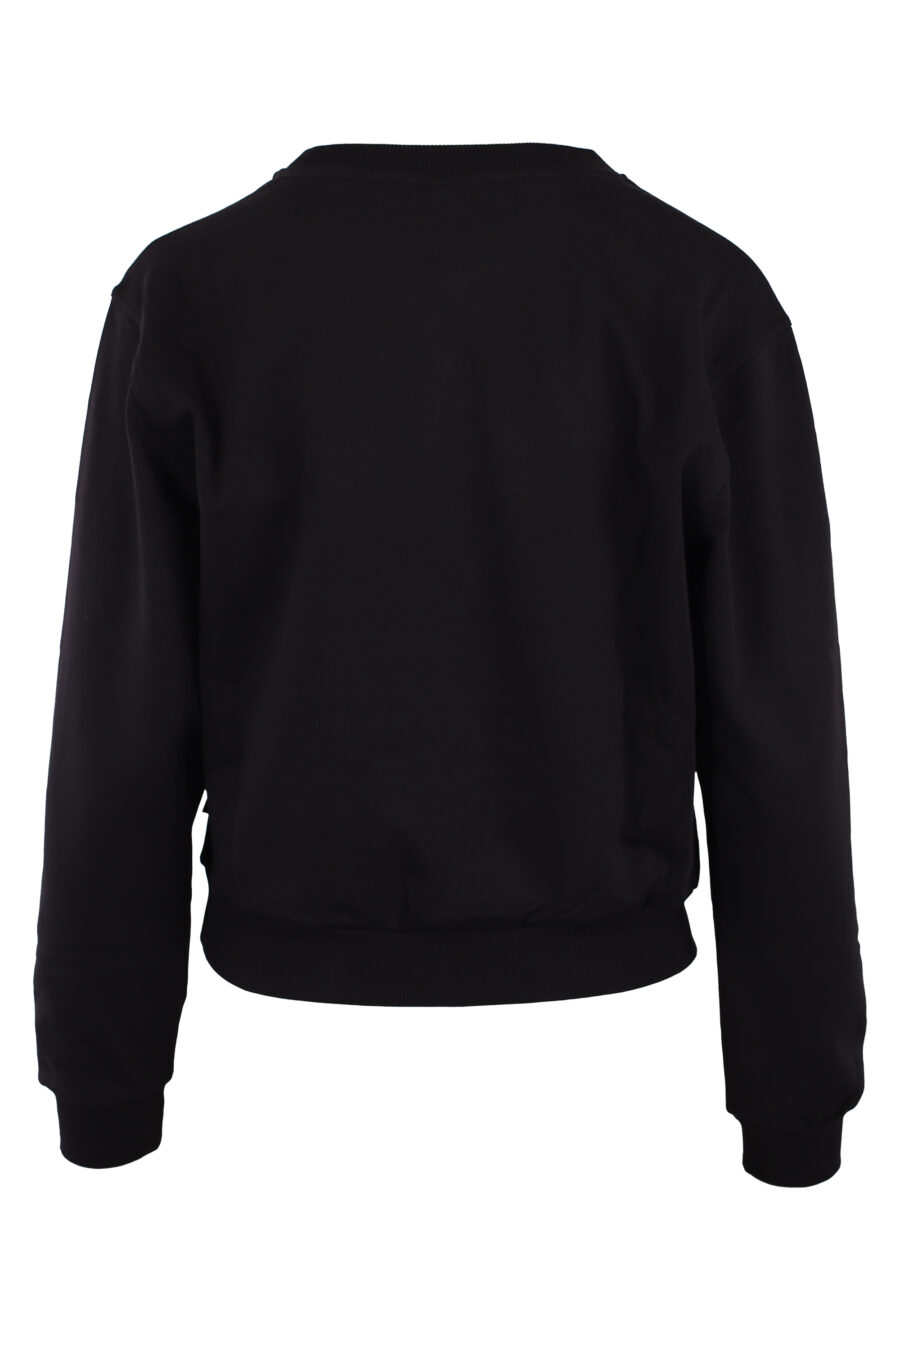 Black sweatshirt with small bear logo - IMG 6187